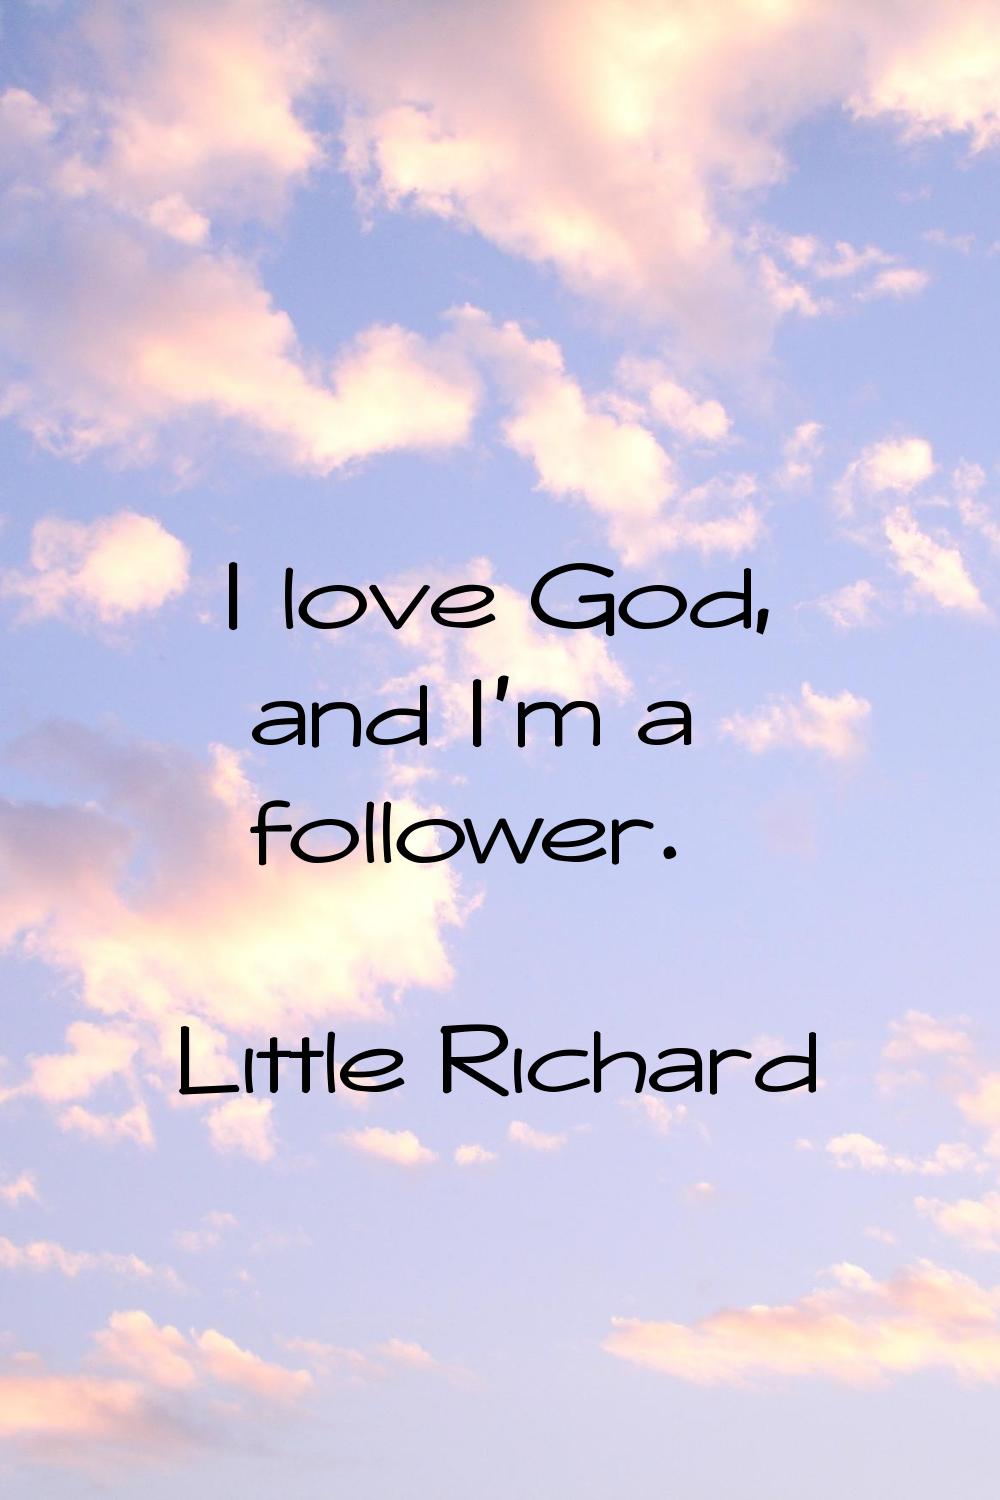 I love God, and I'm a follower.